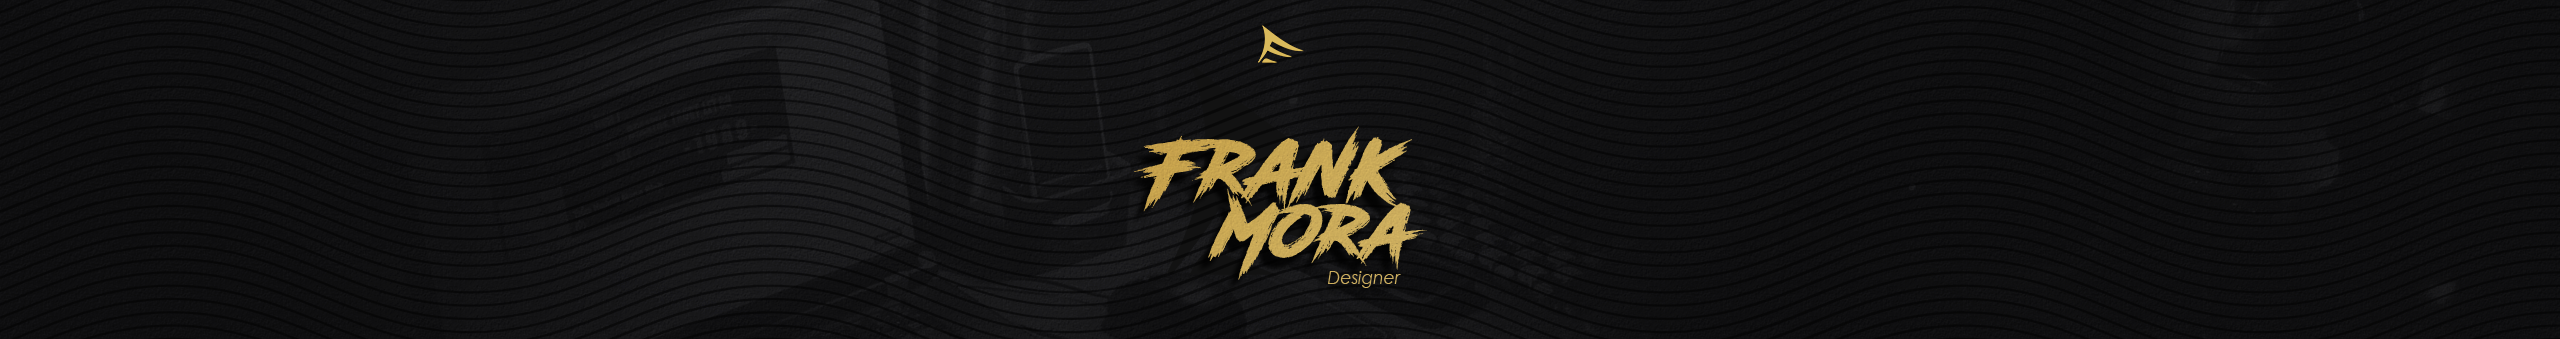 Frank Mora's profile banner